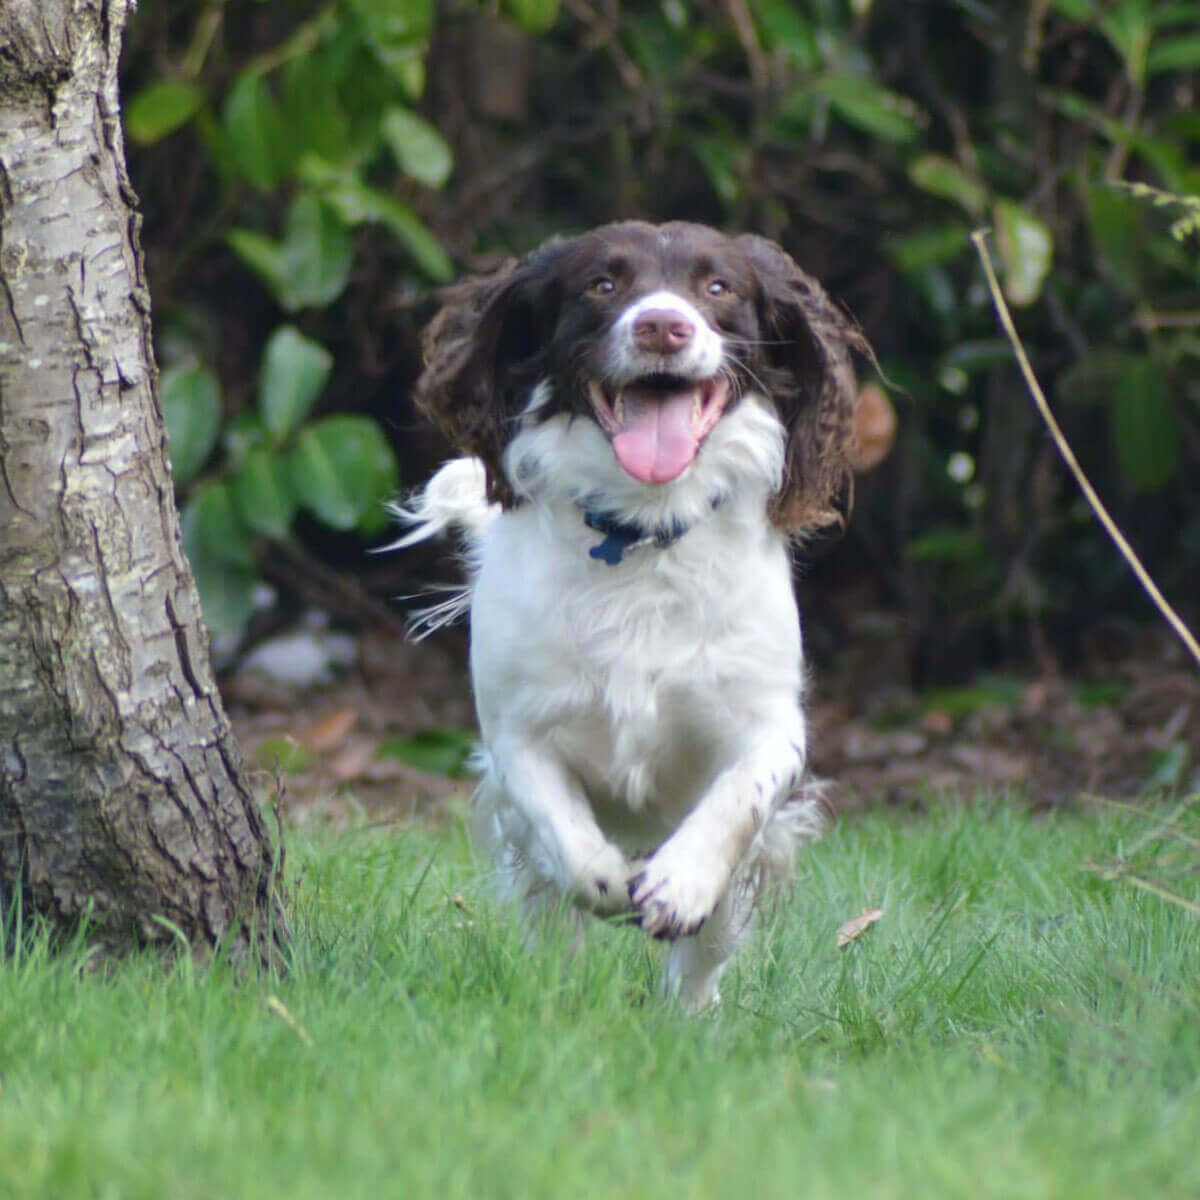 Doggy member Harvey runs through the grass happily